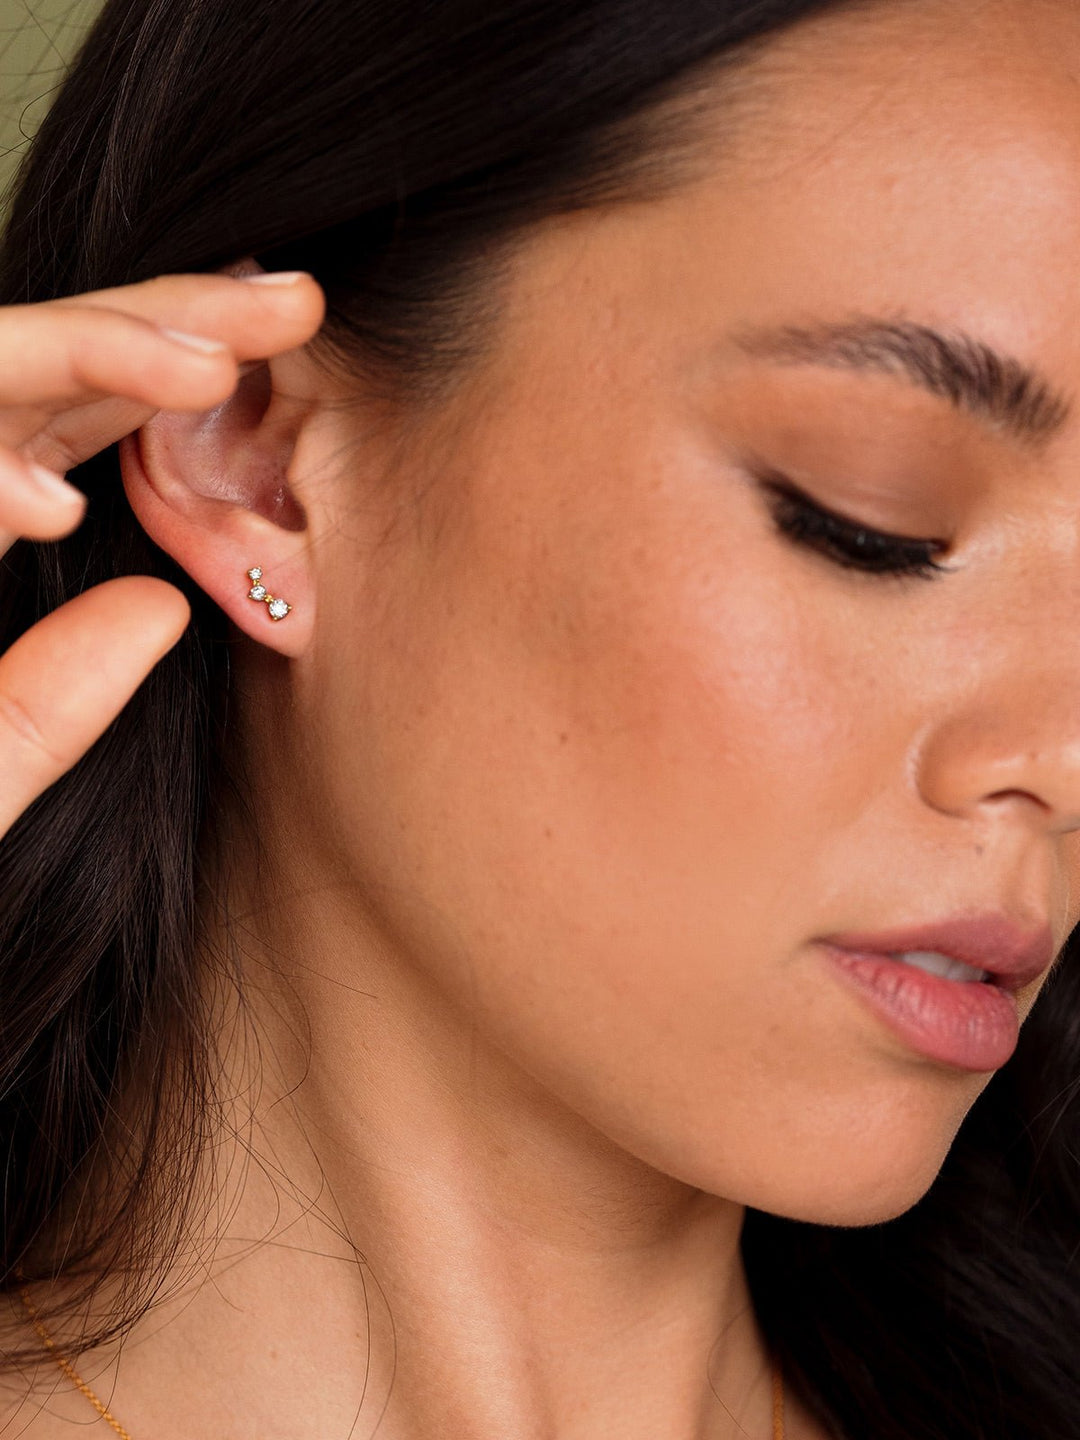 Earring Backings (3 Pairs)